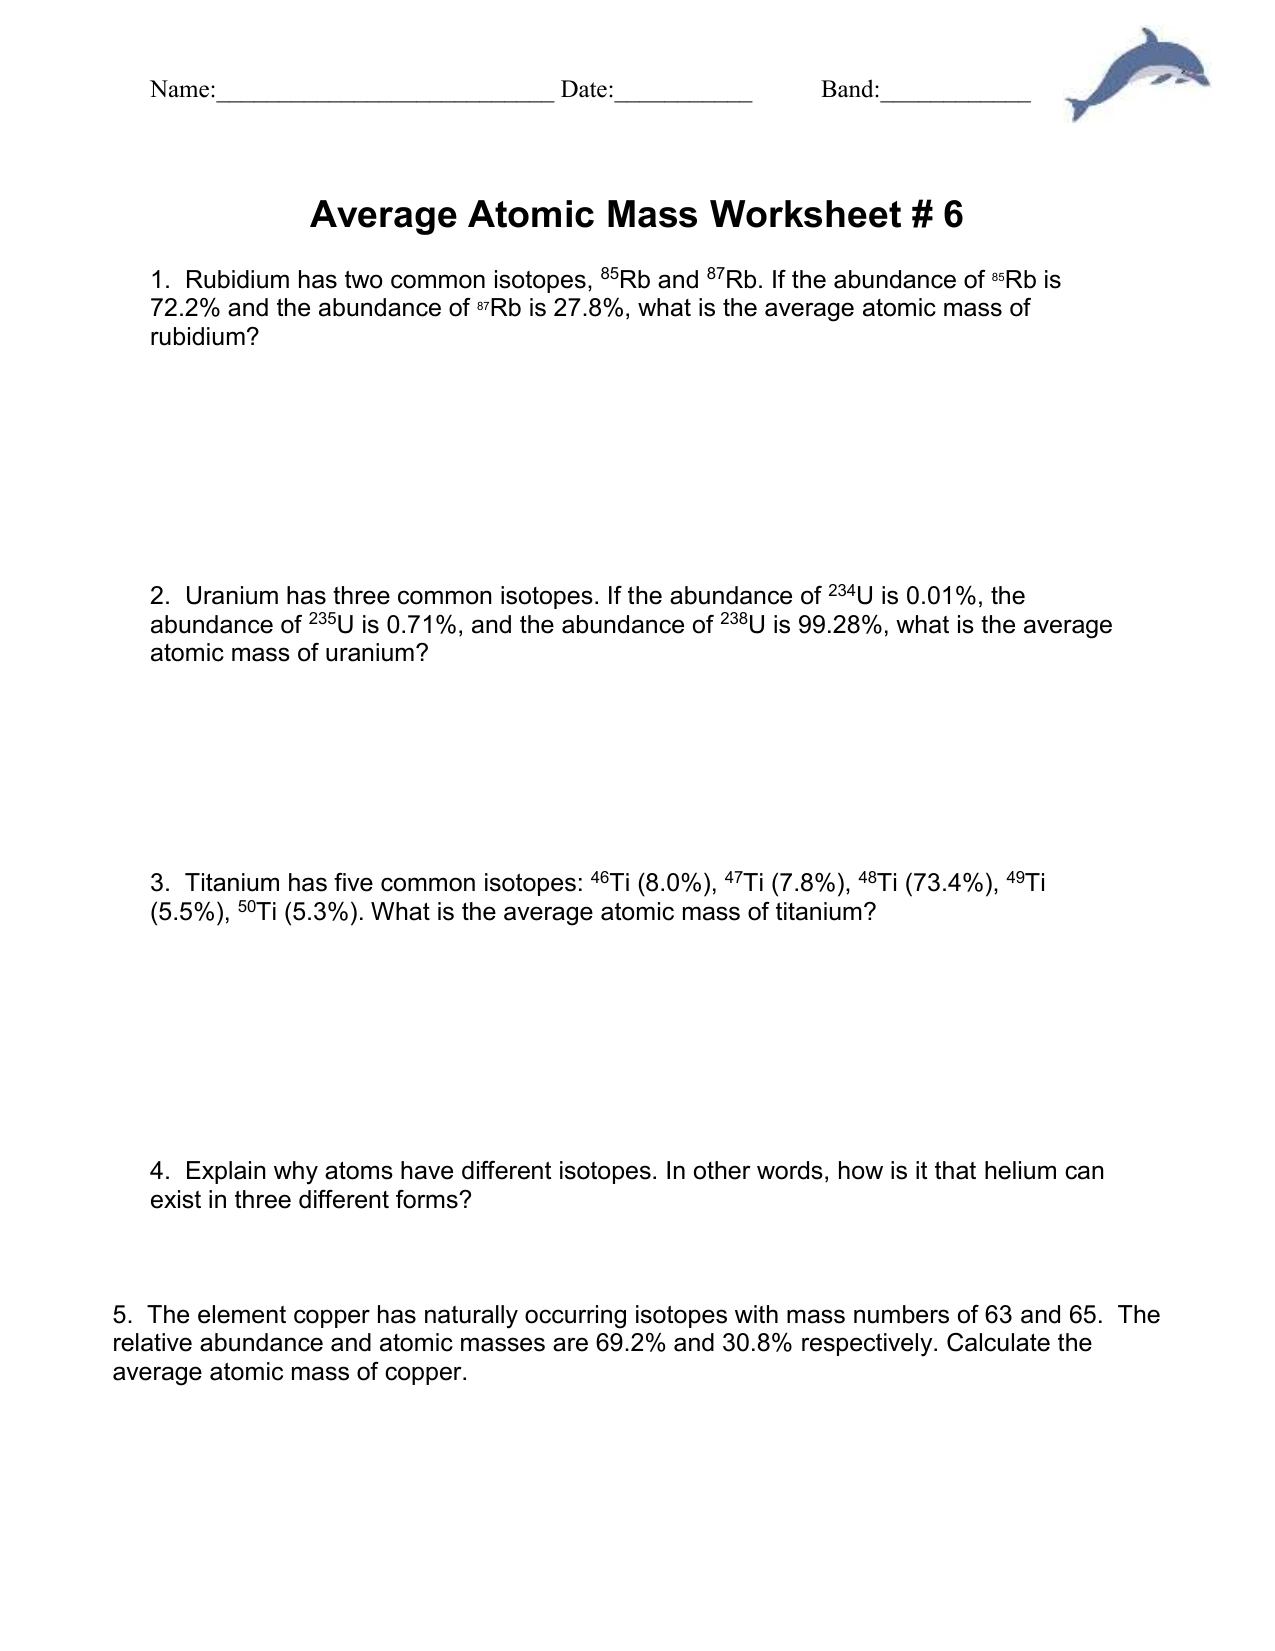 Ch 21 Average atomic mass worksheet Inside Average Atomic Mass Worksheet Answers